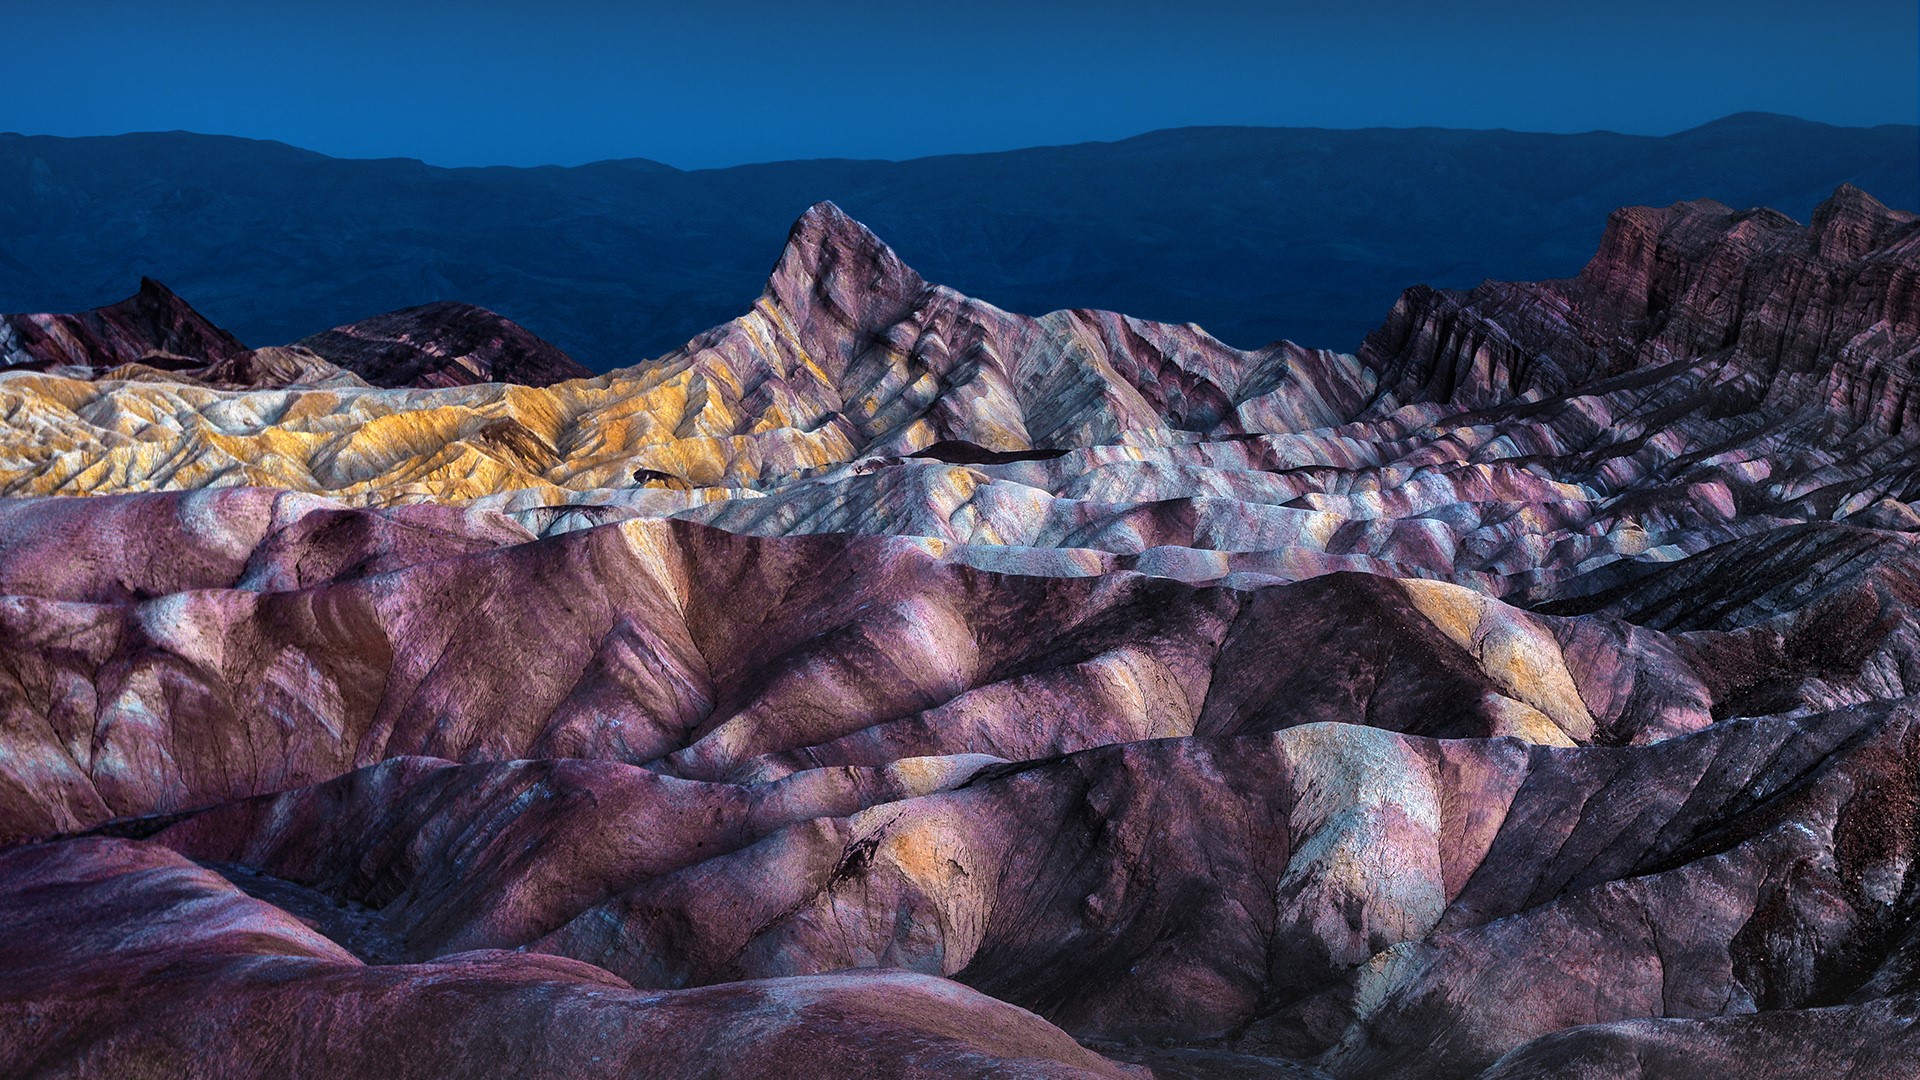 General 1920x1080 nature landscape mountains sky rocks night lights Death Valley Zabriskie Point California USA